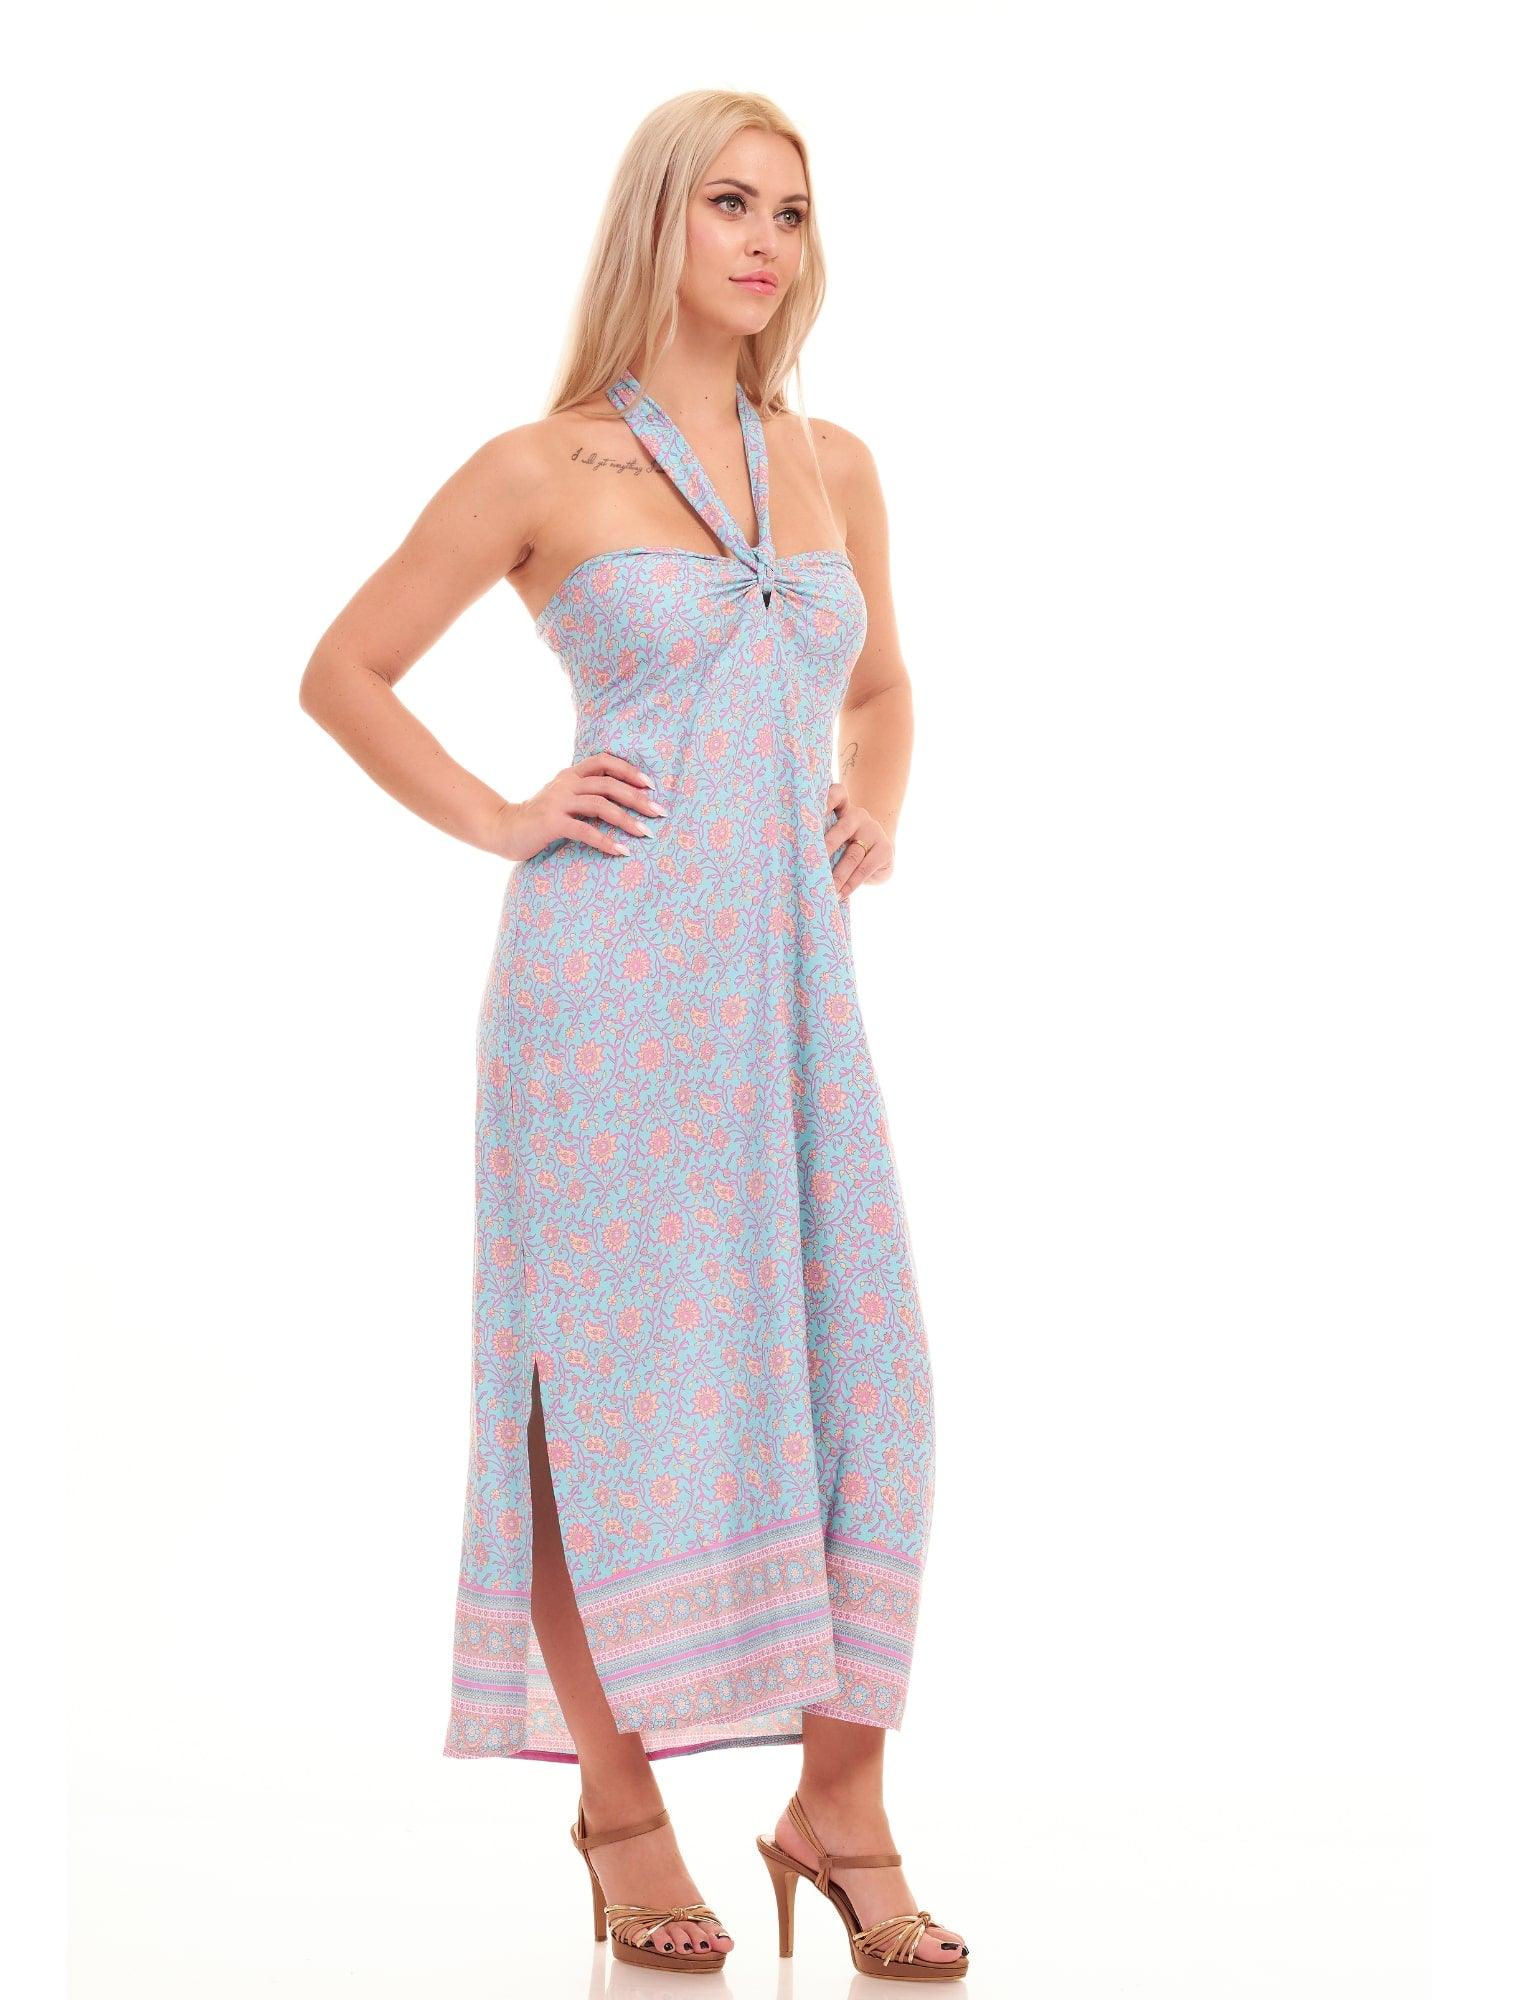 AMALFI DRESS - BLUE FLORAL - Woman Dress - Acqua Bonita